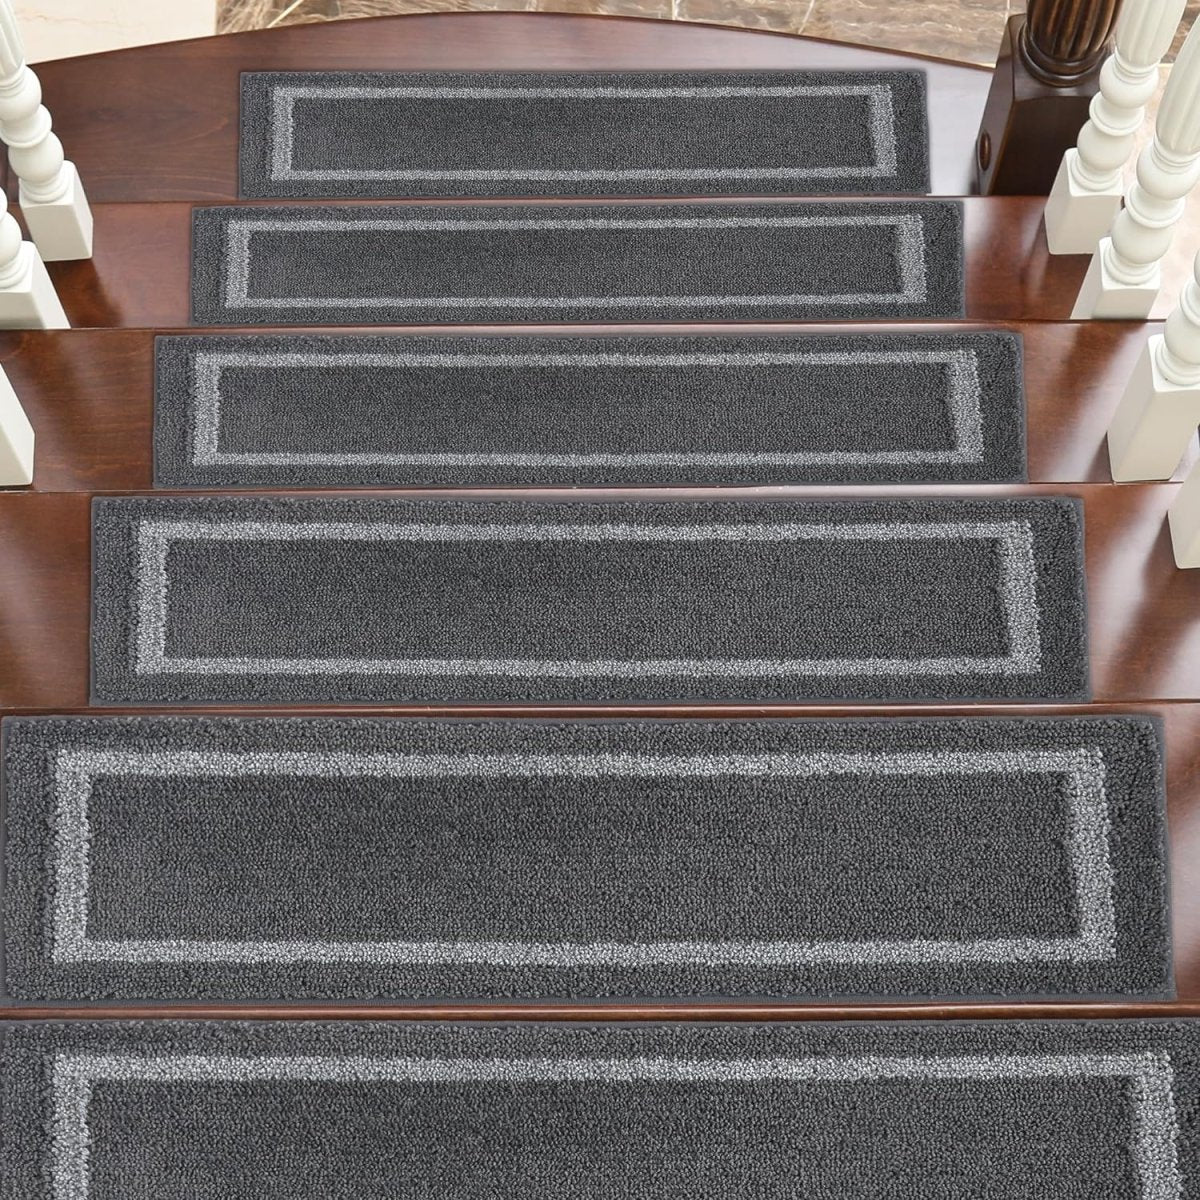 Premium Non-Slip Stair Carpet Treads - 22 X 70cm, Ideal for Kids, Elders, and Pets - Machine Washable - Slips Away - B0CSHY1WCK -